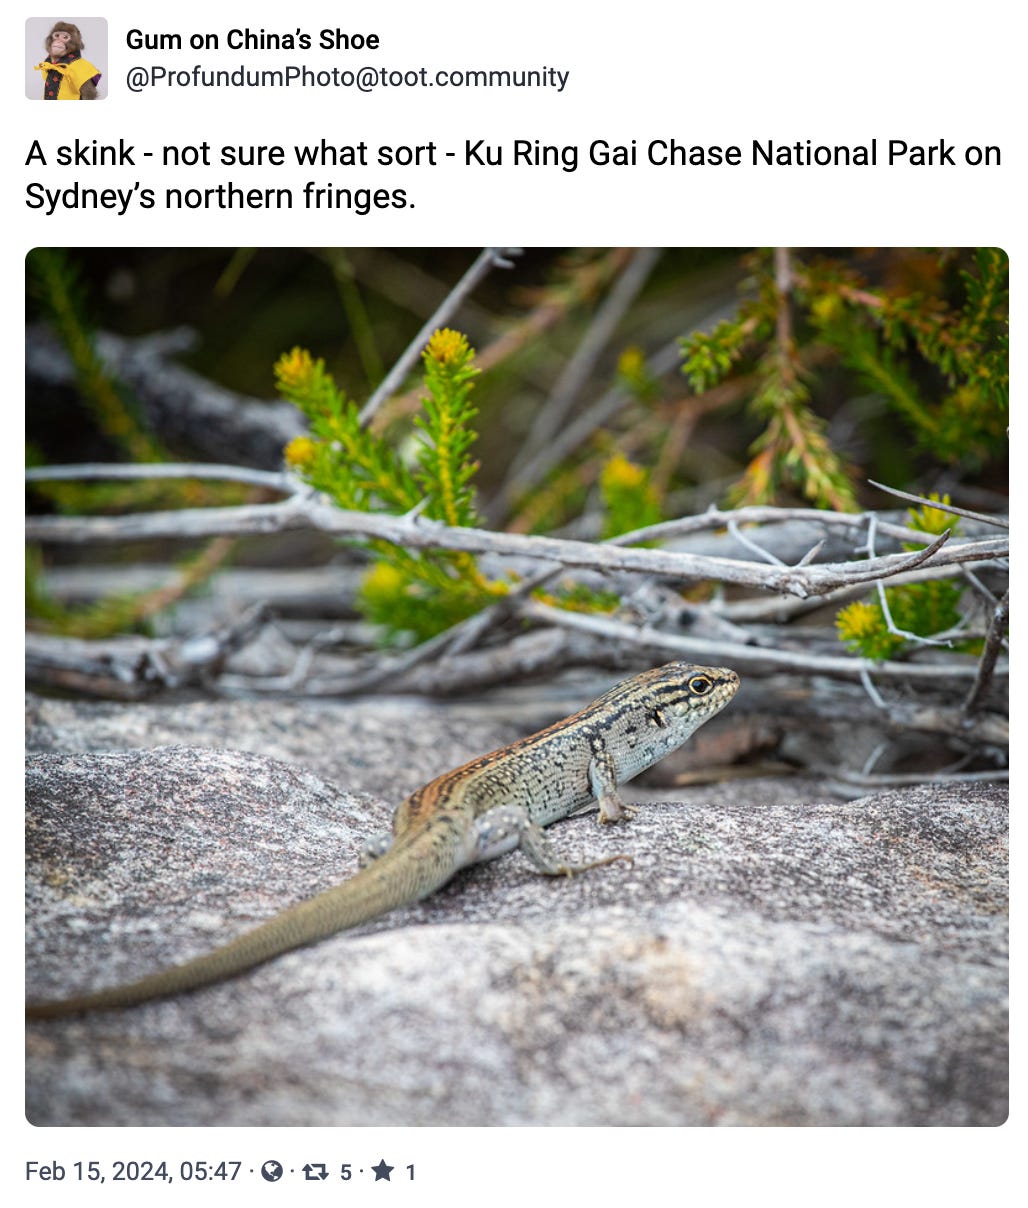 A skink - not sure what sort - Ku Ring Gai Chase National Park on Sydney’s northern fringes.